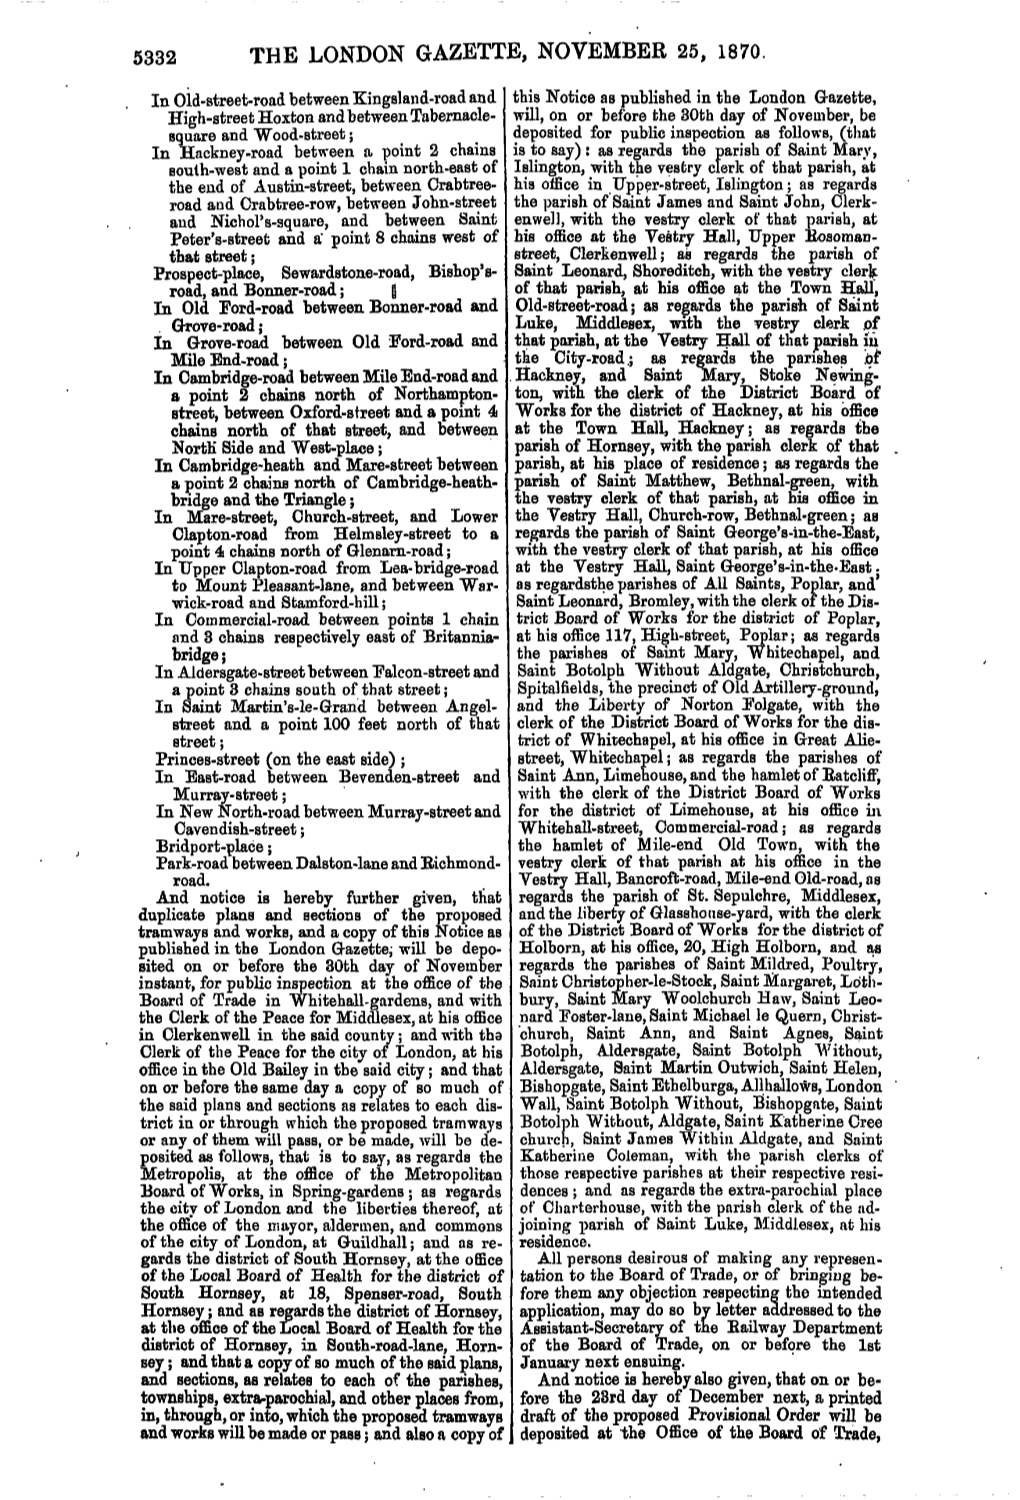 5332 the London Gazette, November 25, 1870